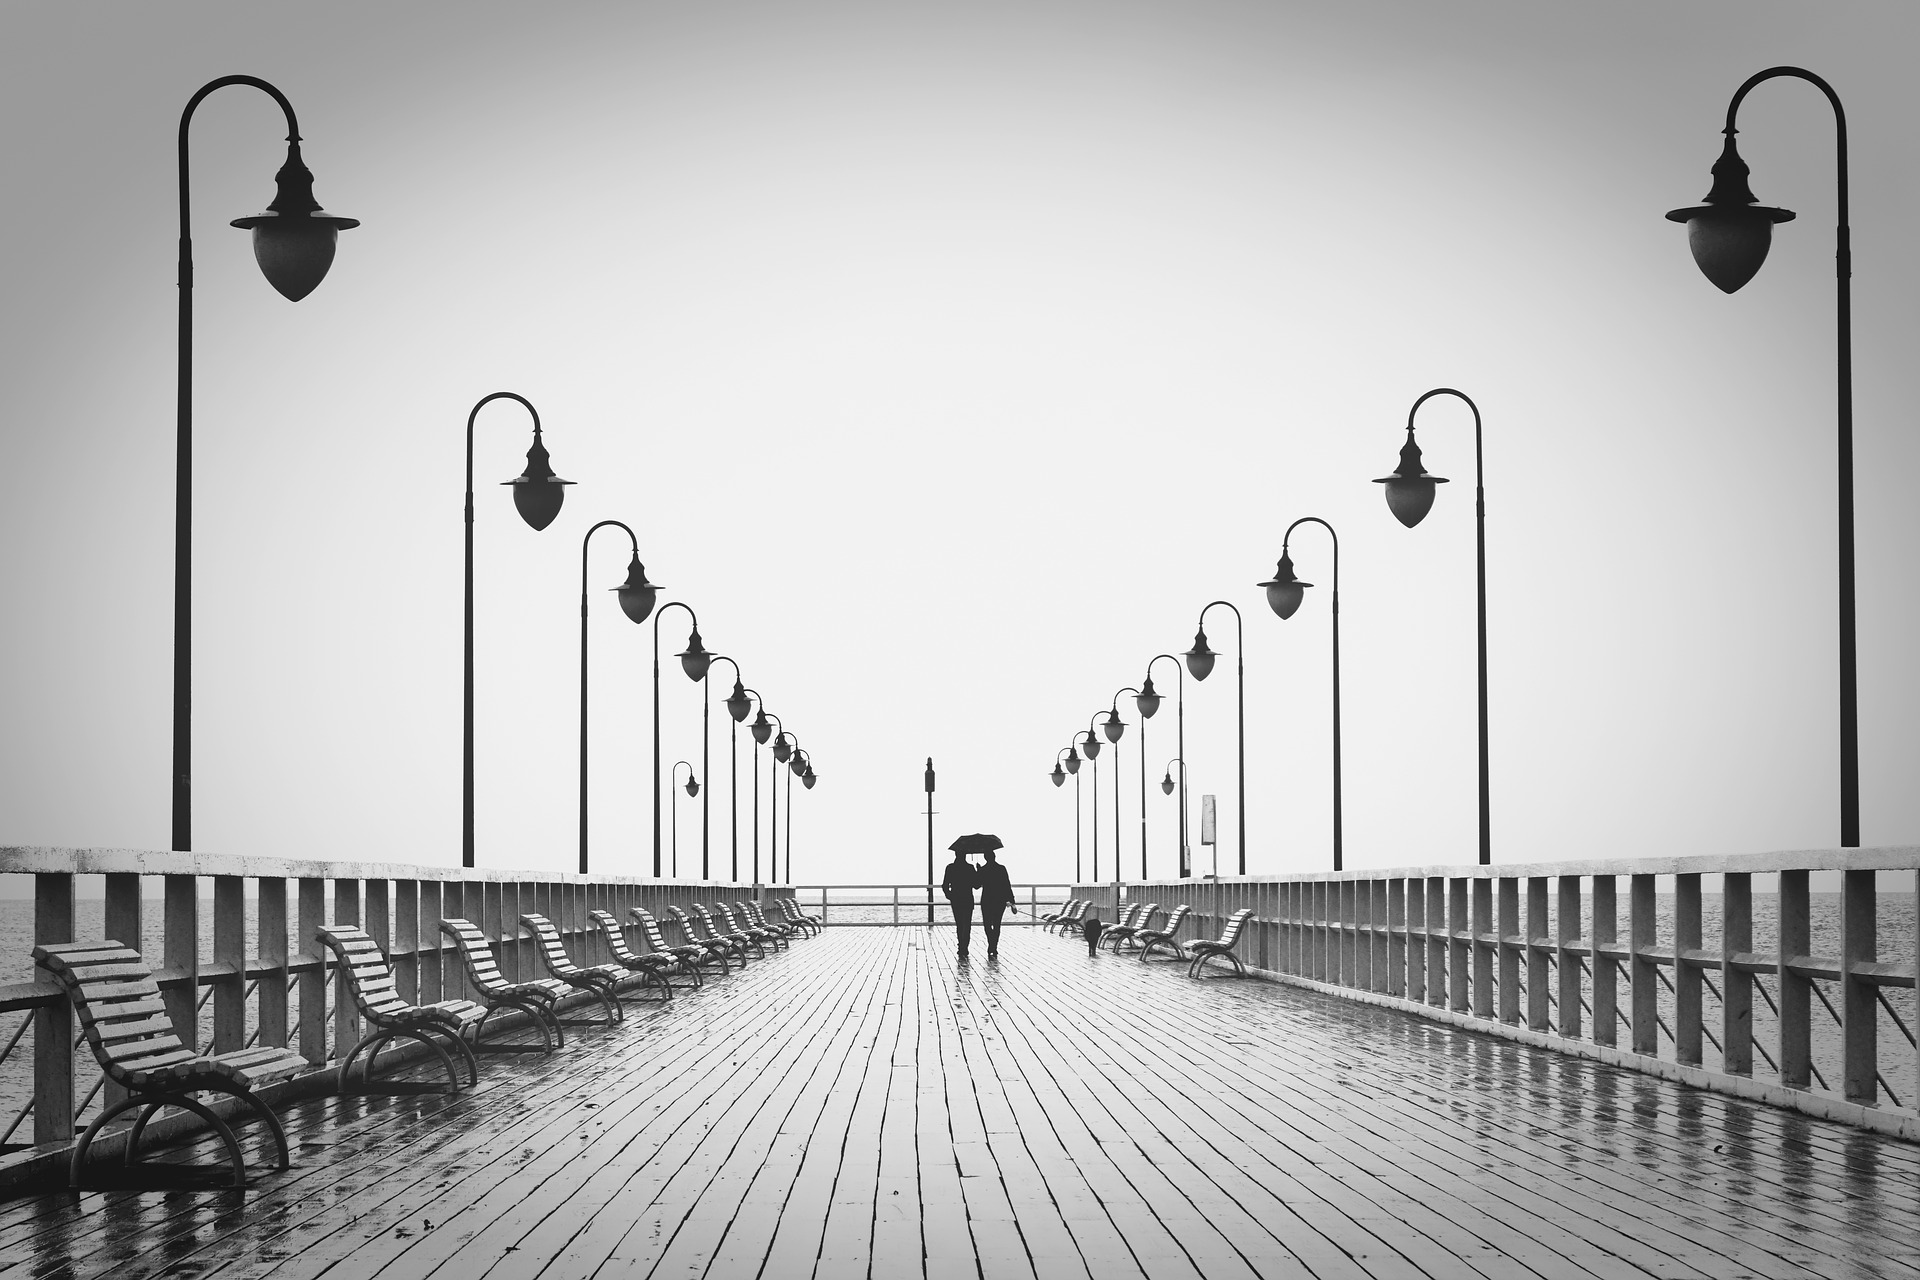 https://pixabay.com/photos/couple-boardwalk-silhouettes-walk-1783843/